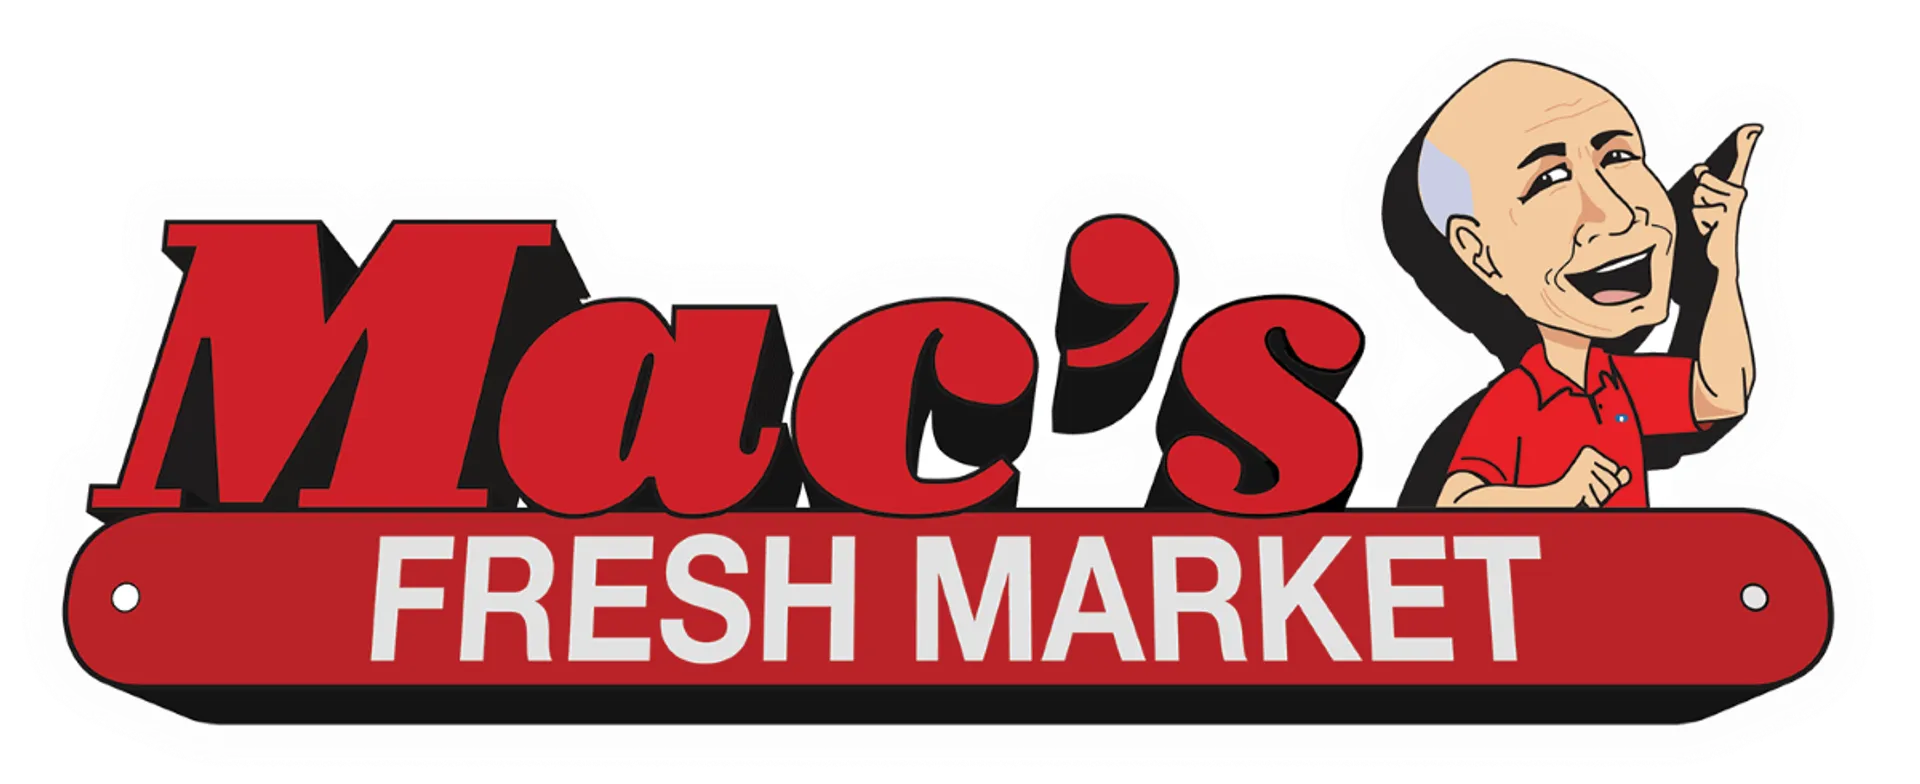 MAC'S FRESHMARKET logo. Current weekly ad